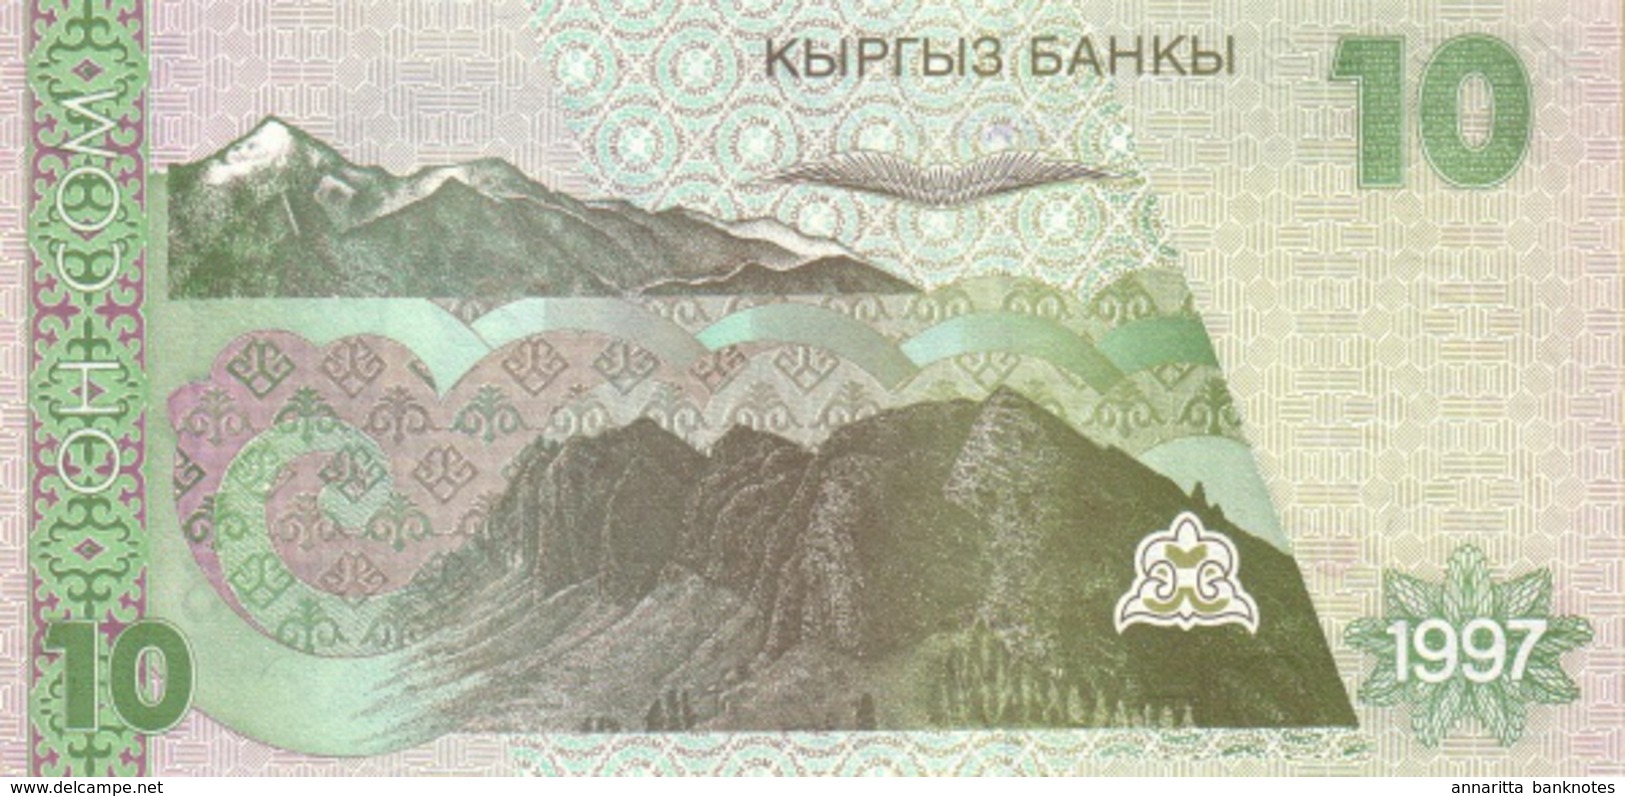 KYRGYZSTAN 10 COM (SOM) 1997 P-14 UNC [ KG212a ] - Kirgisistan